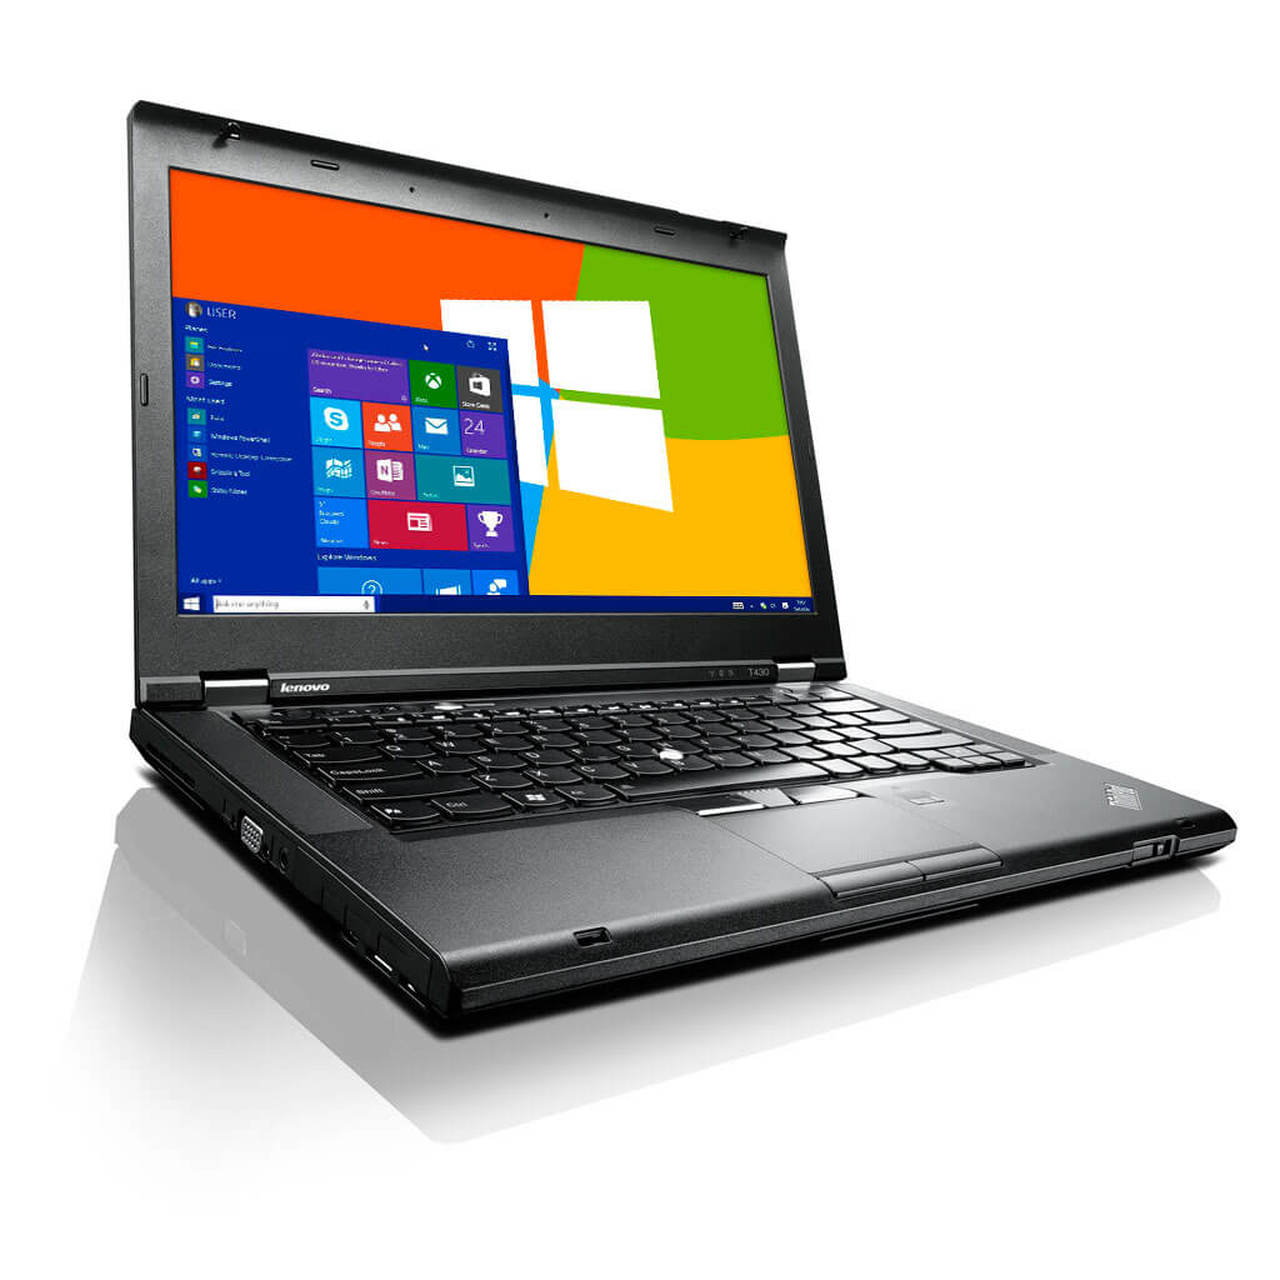 Lenovo ThinkPad T430 14" Laptop, 2.6GHz Intel i5 Dual Core Gen 3, 8GB RAM, 128GB SSD, Windows 10 Home 64 Bit (Grade B)